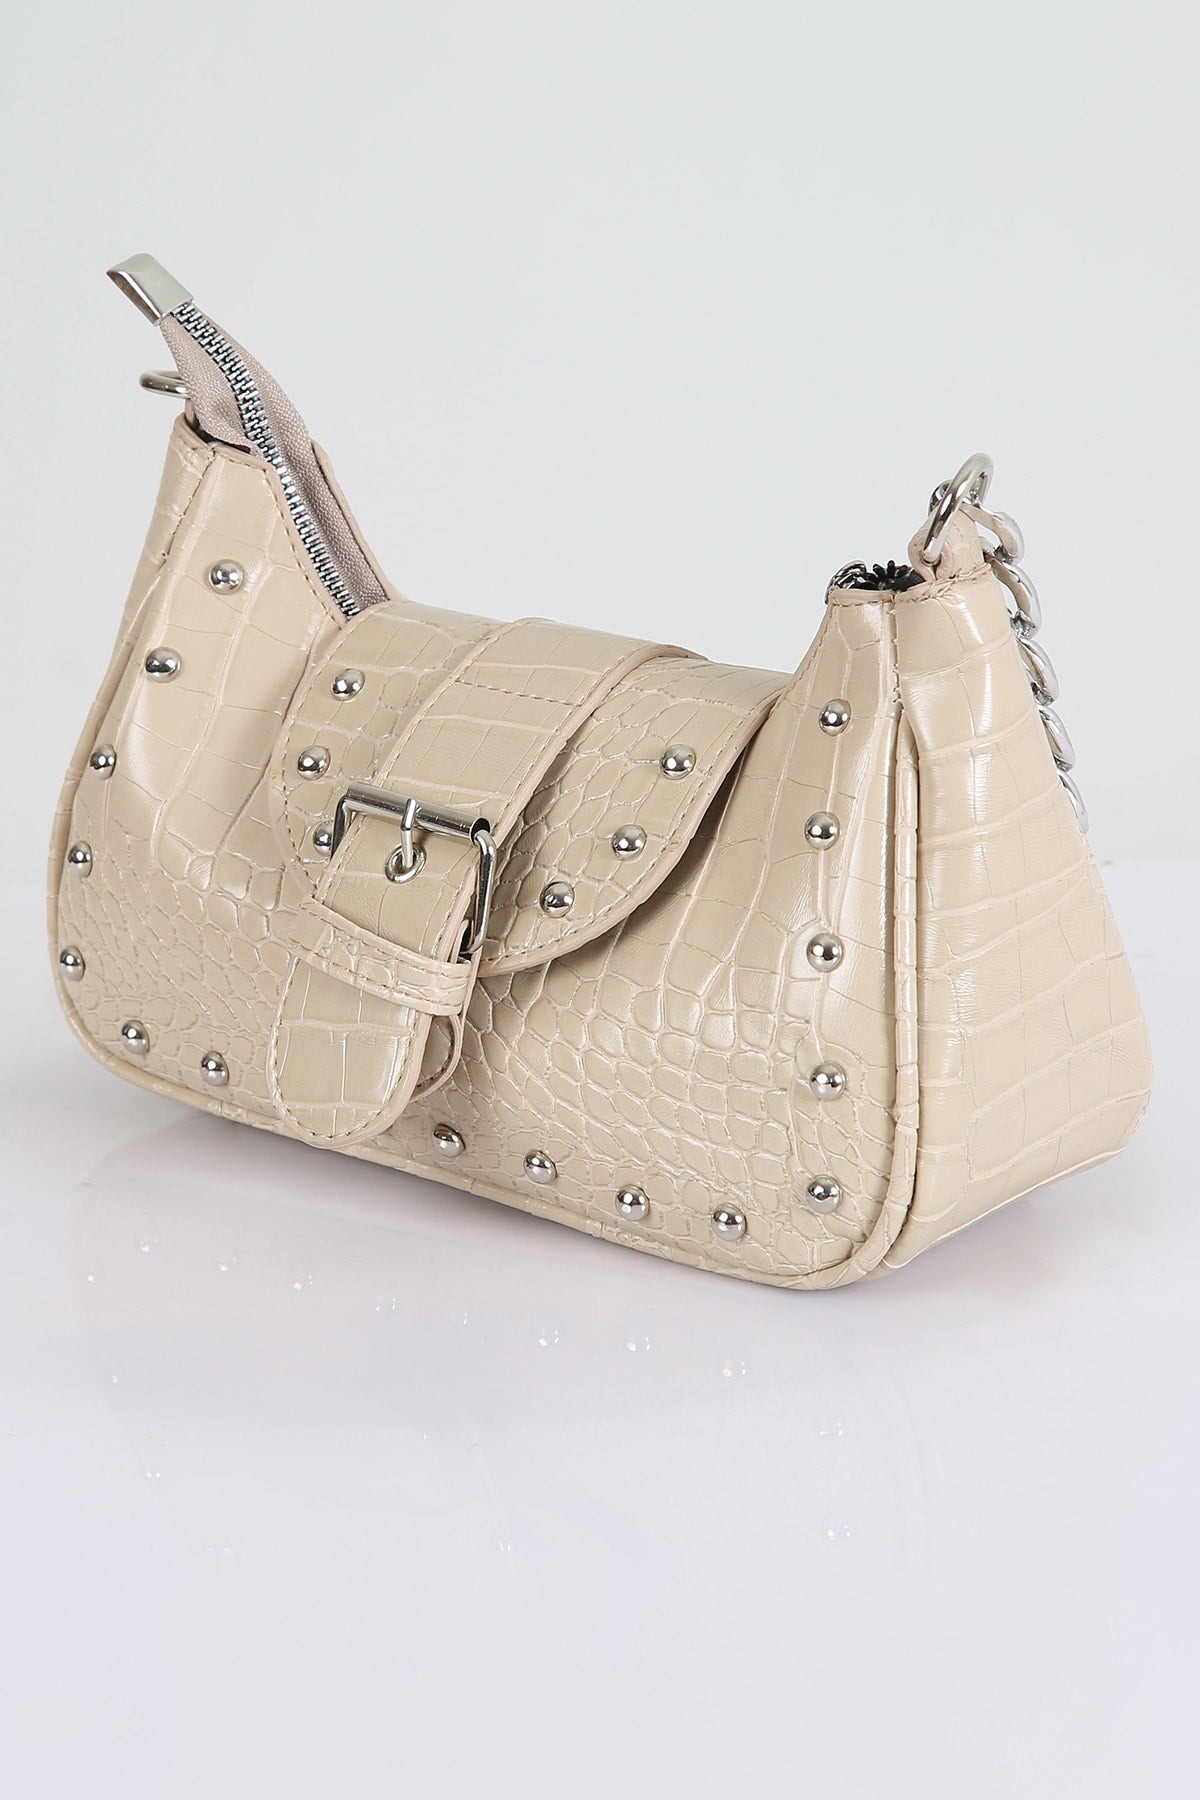 Crocodile Patterned Mink Handbag with Bony Staples